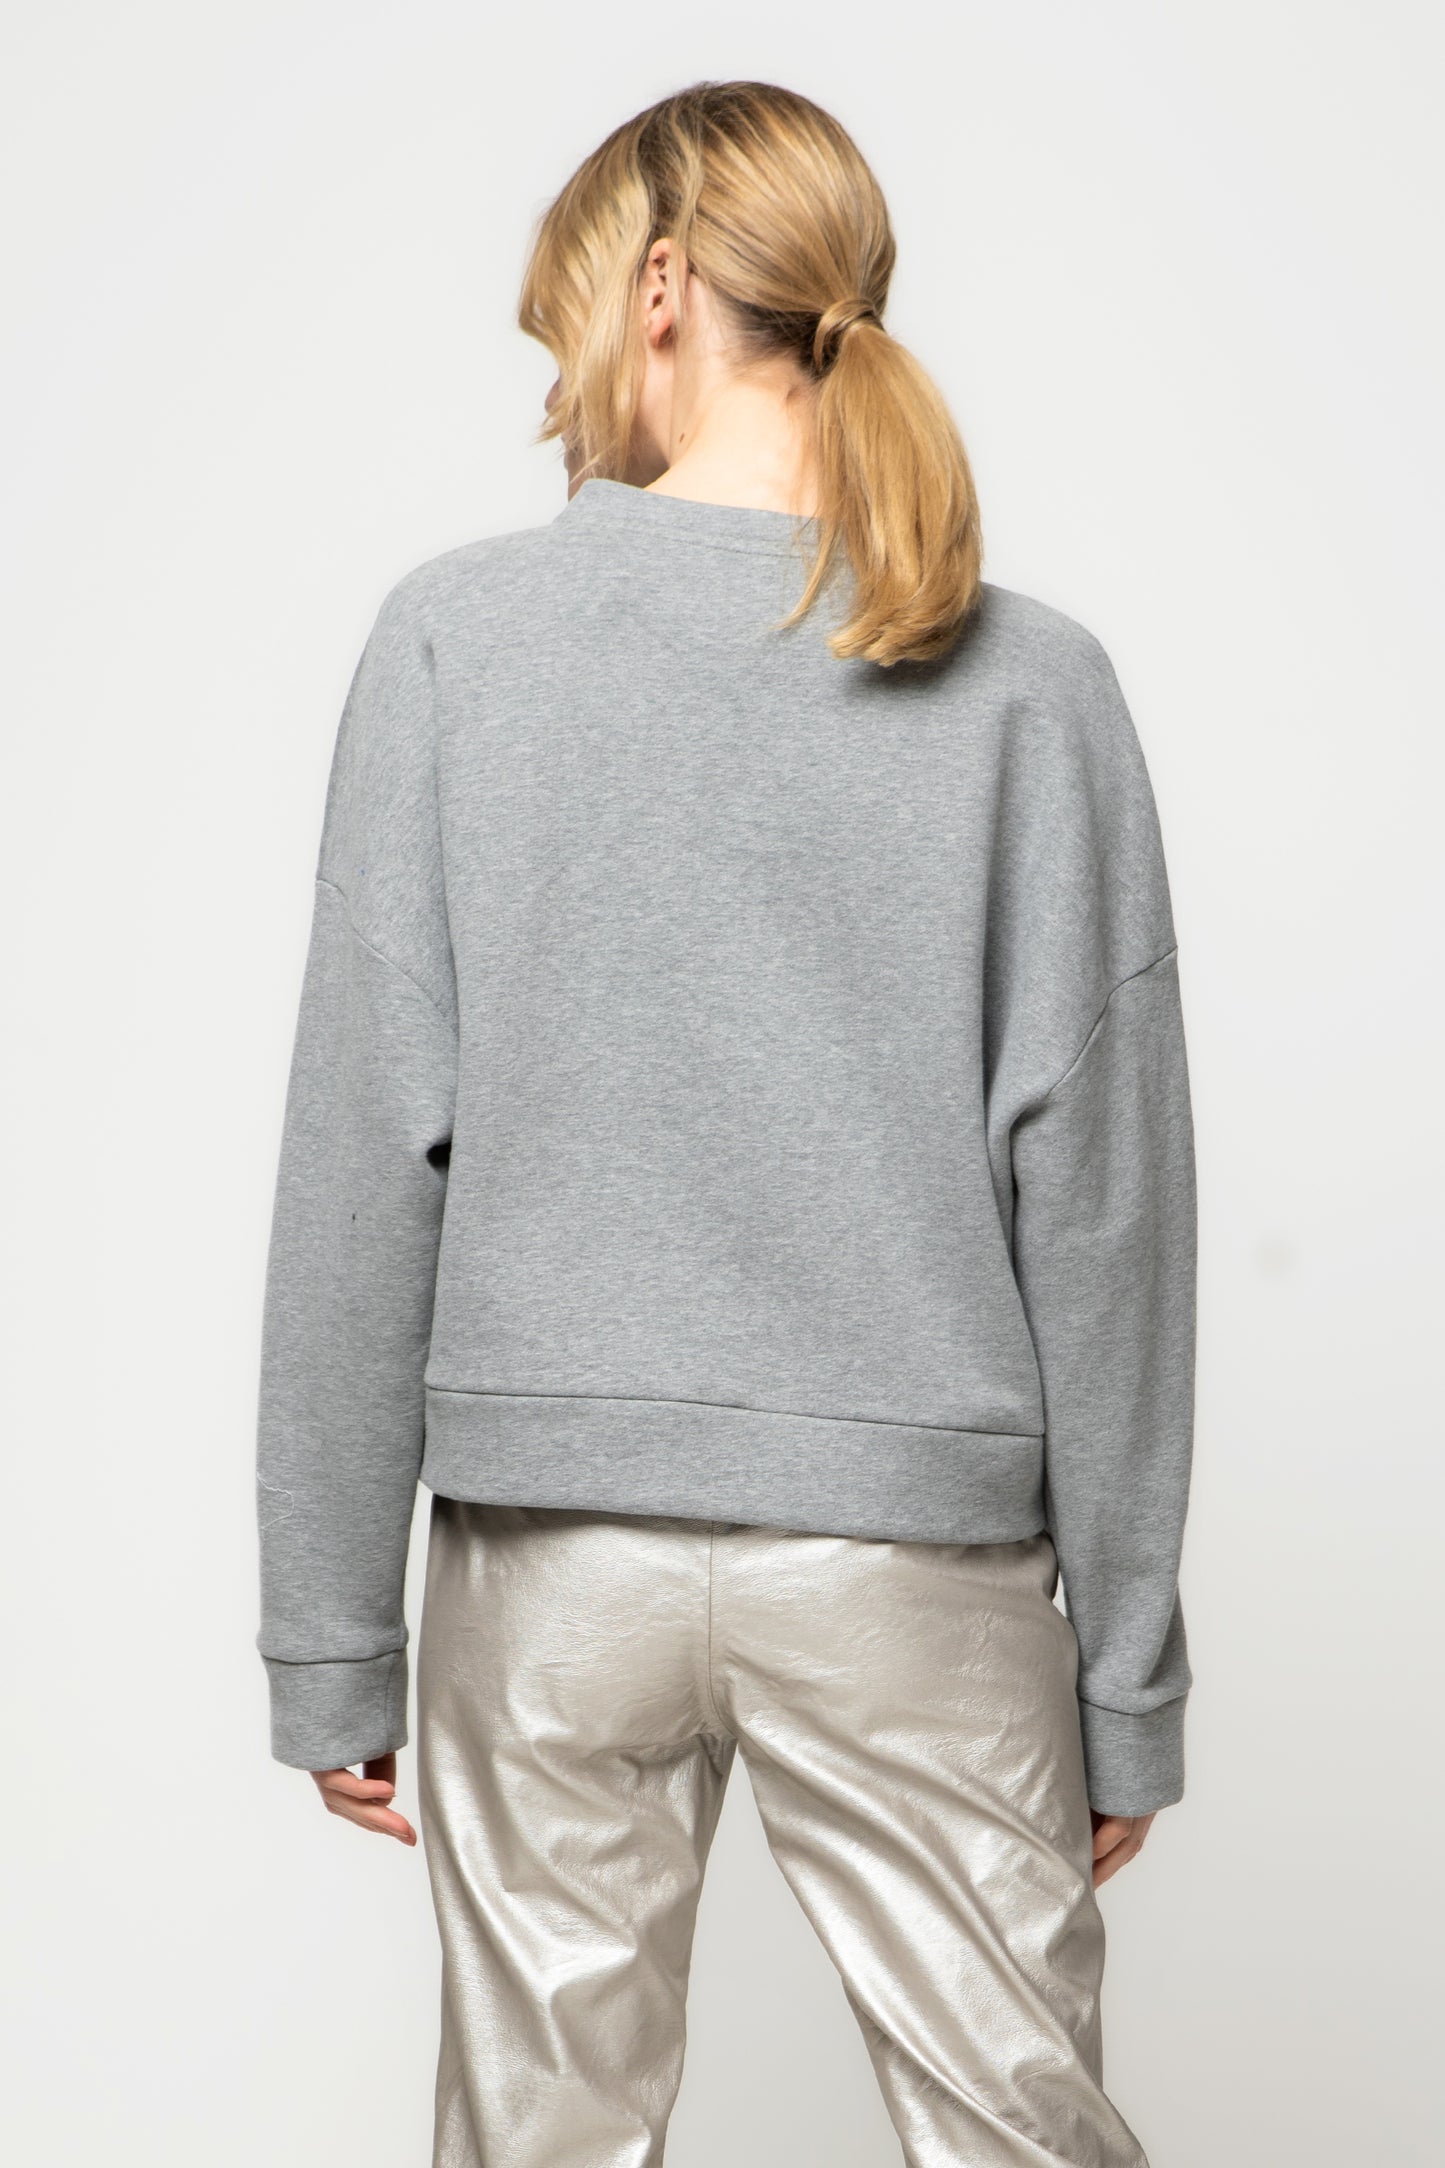 HARPER - Silver sweatshirt